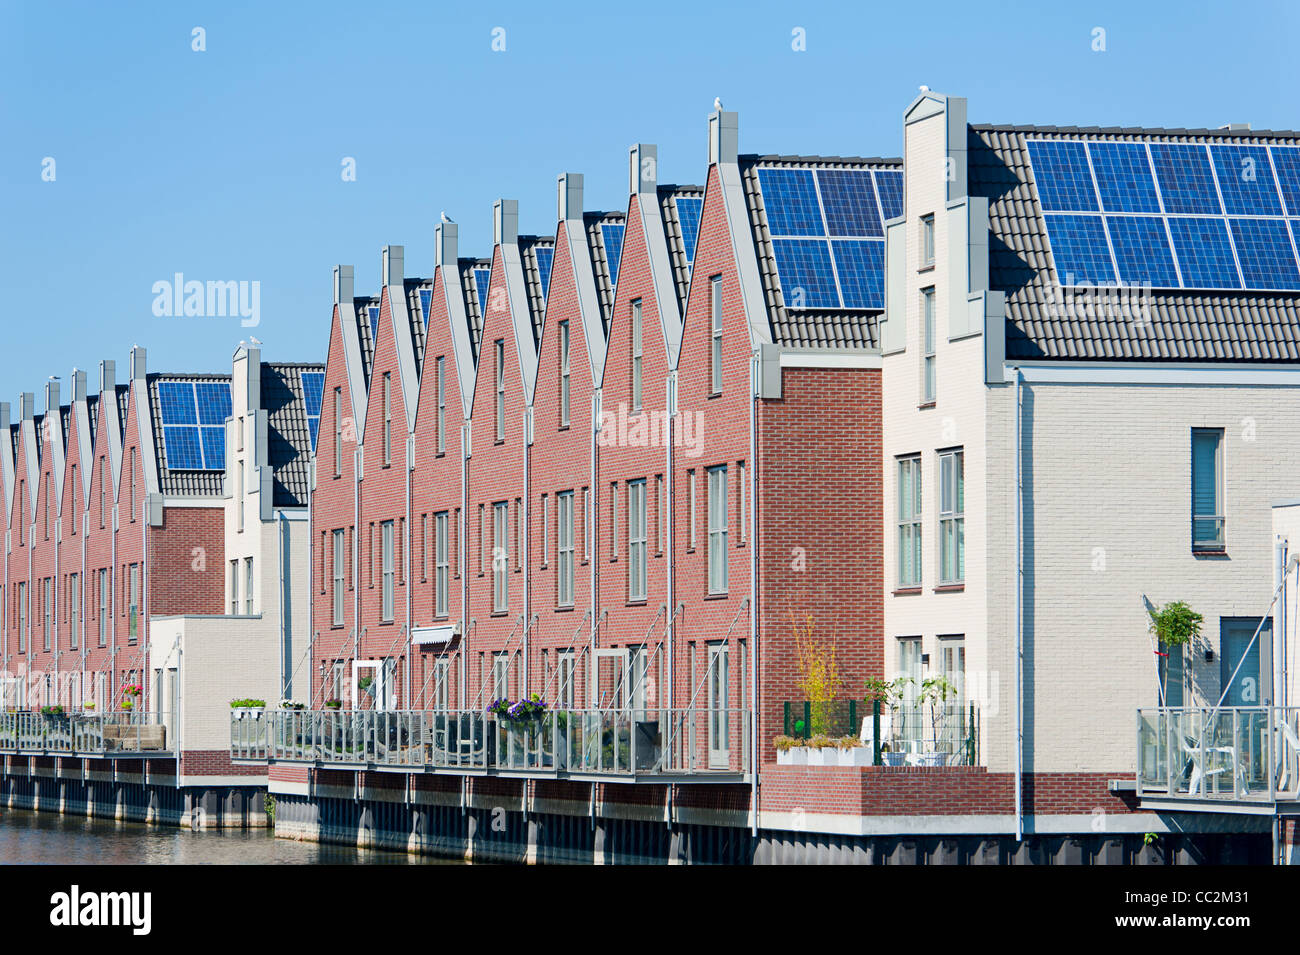 Maisons néerlandaise moderne with solar panels on roof Banque D'Images